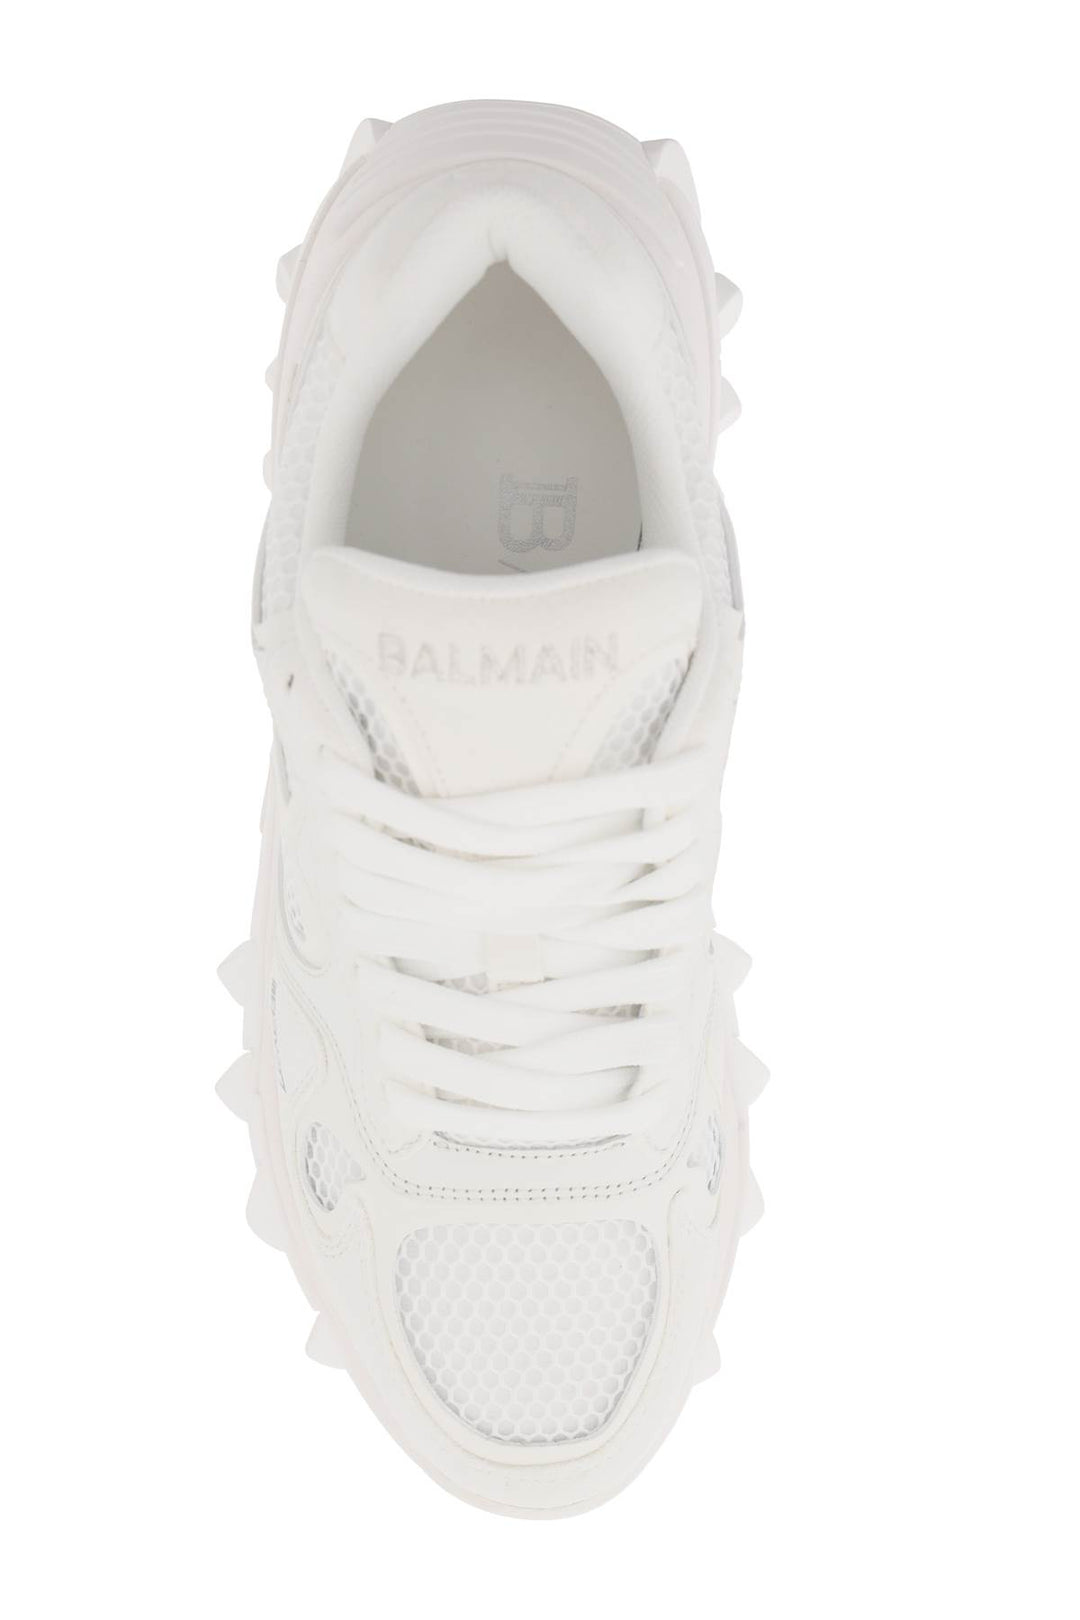 Balmain B East Leather And Mesh Sneakers   White